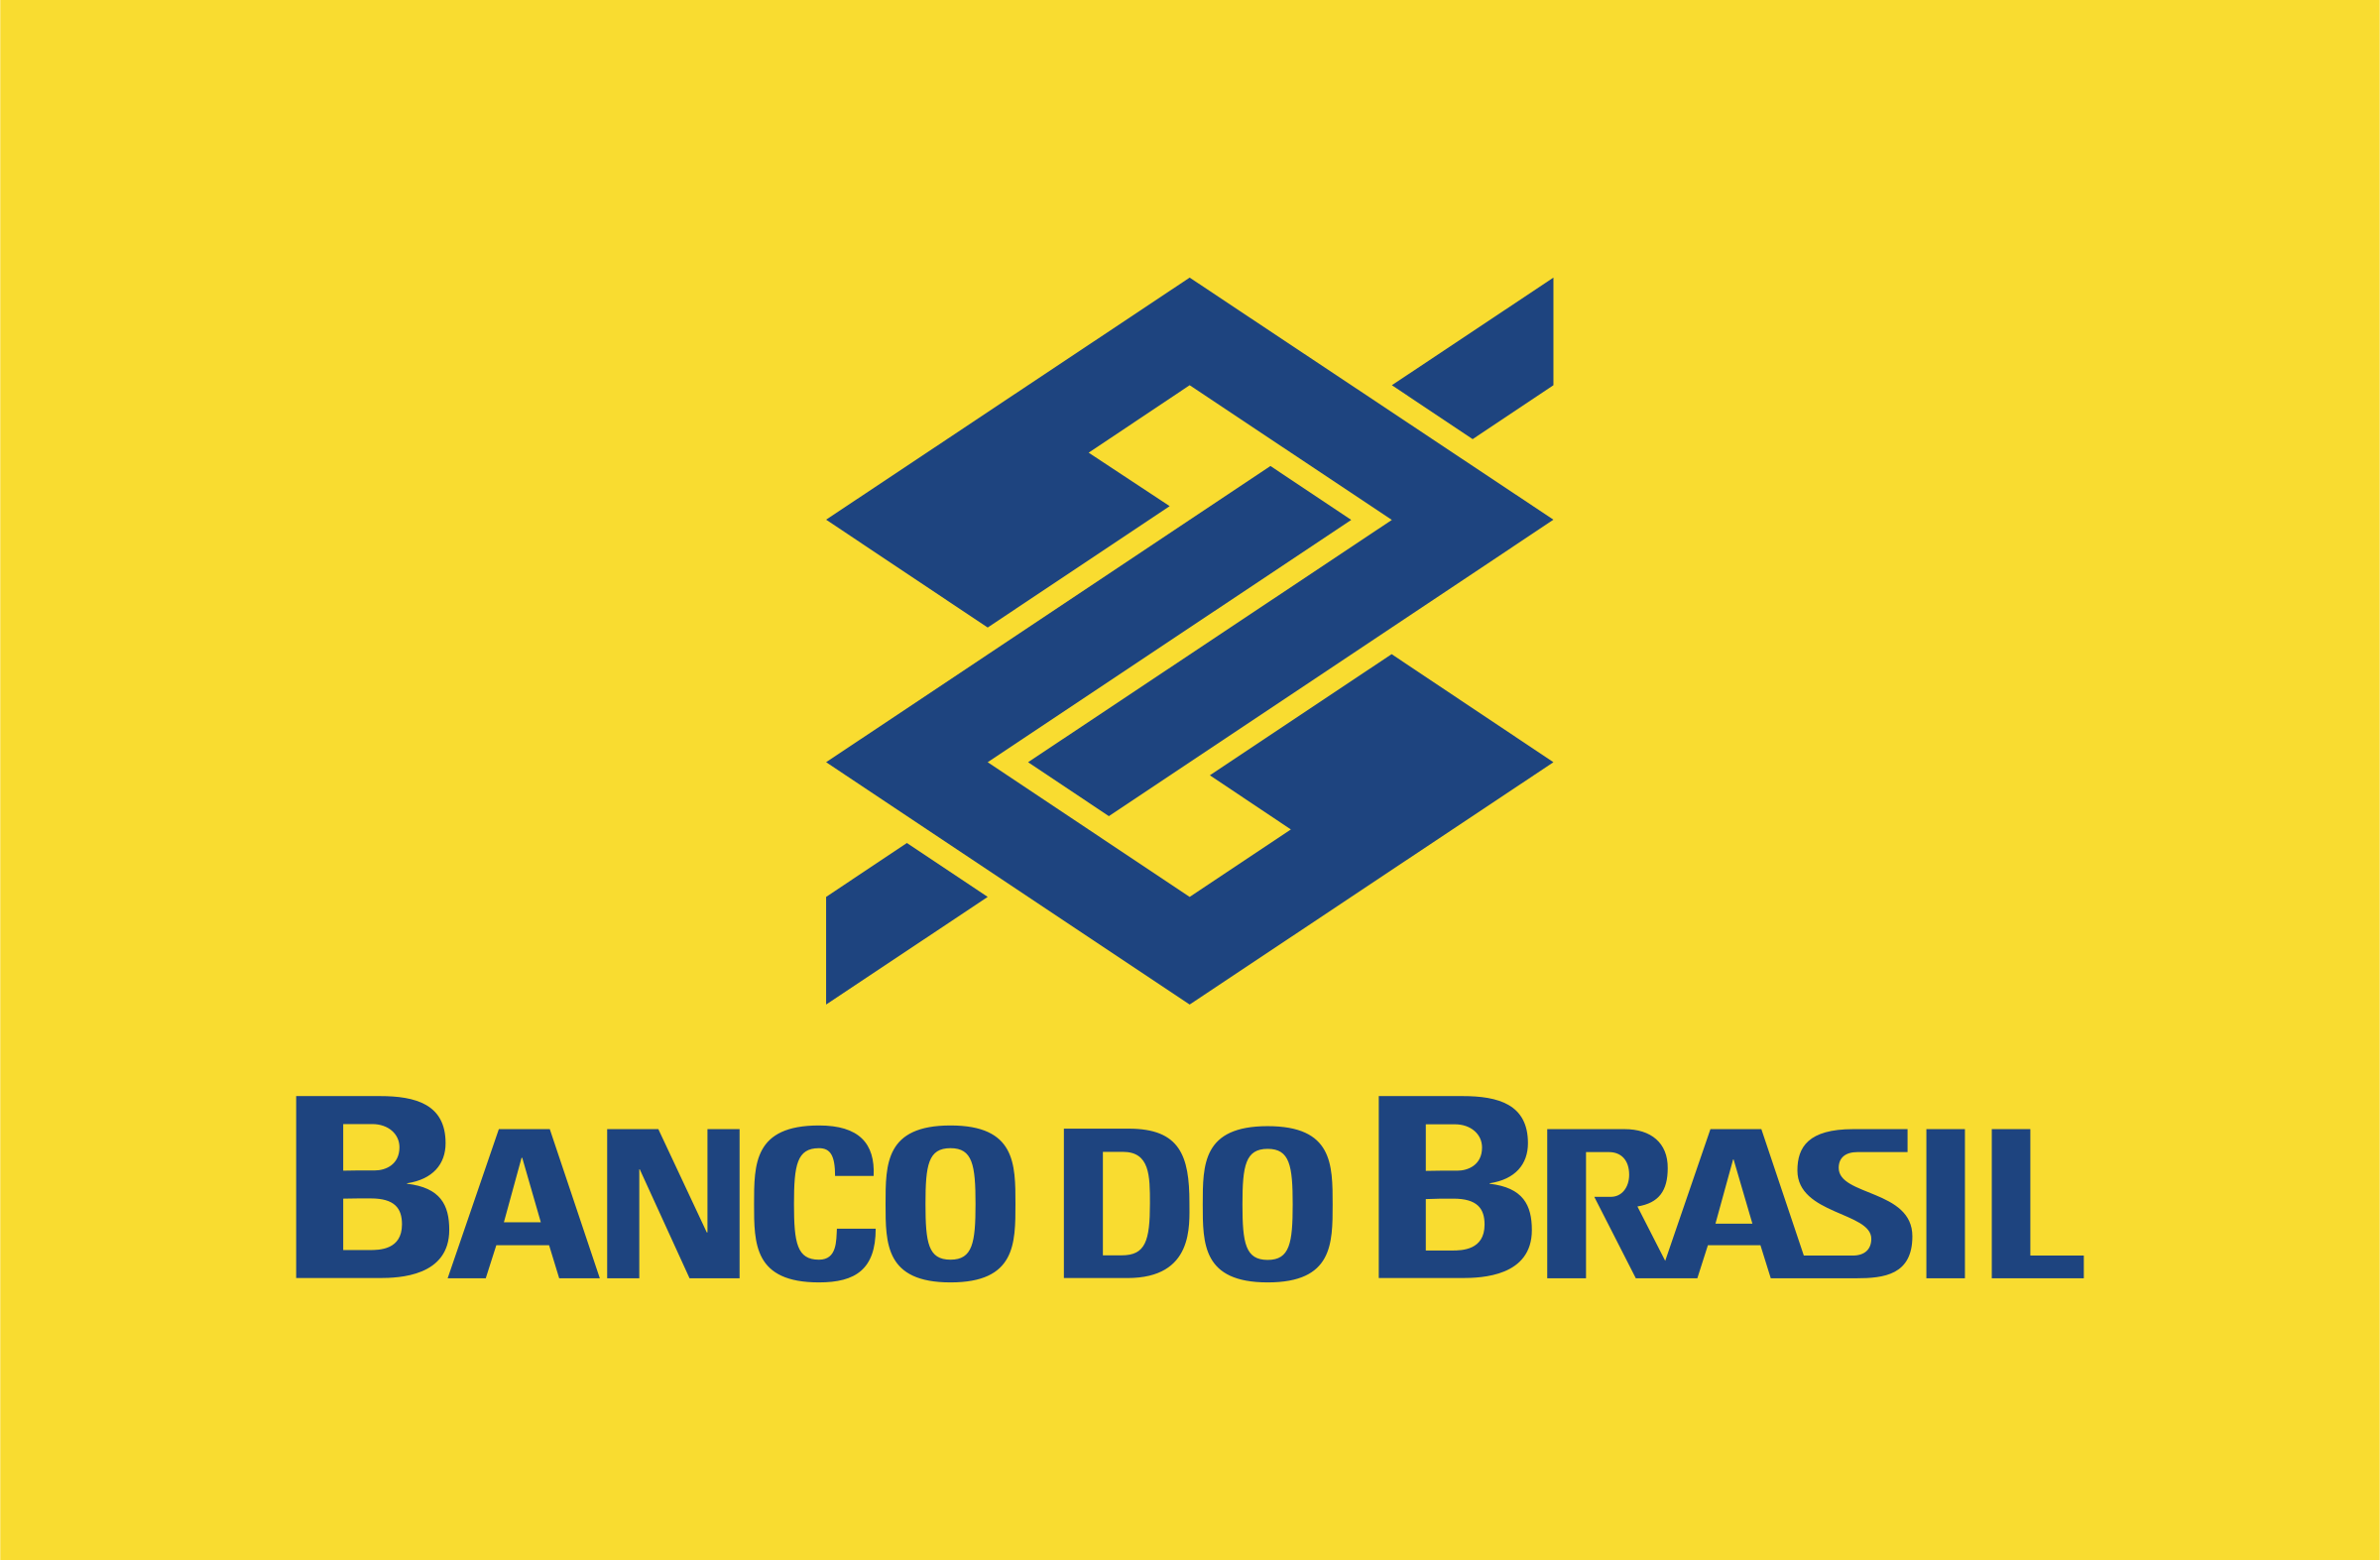 Brasil Logo - Banco do Brasil Logo PNG Transparent & SVG Vector